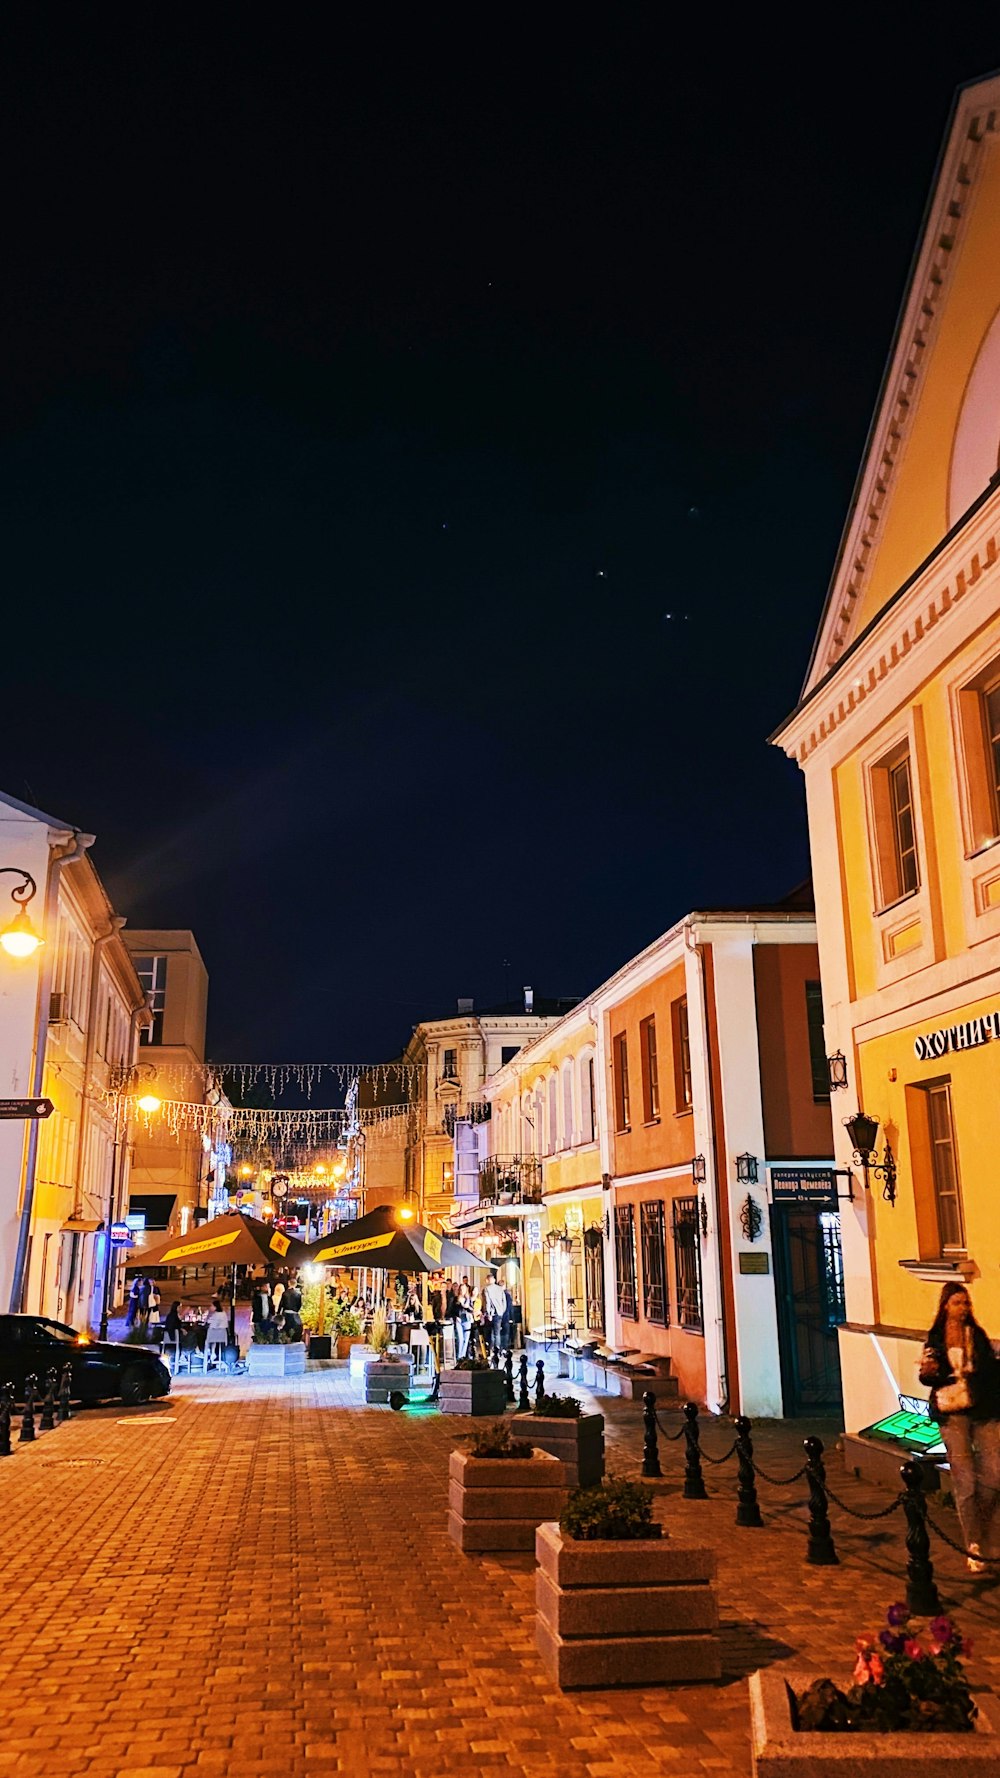 a cobblestone street at night in a european town